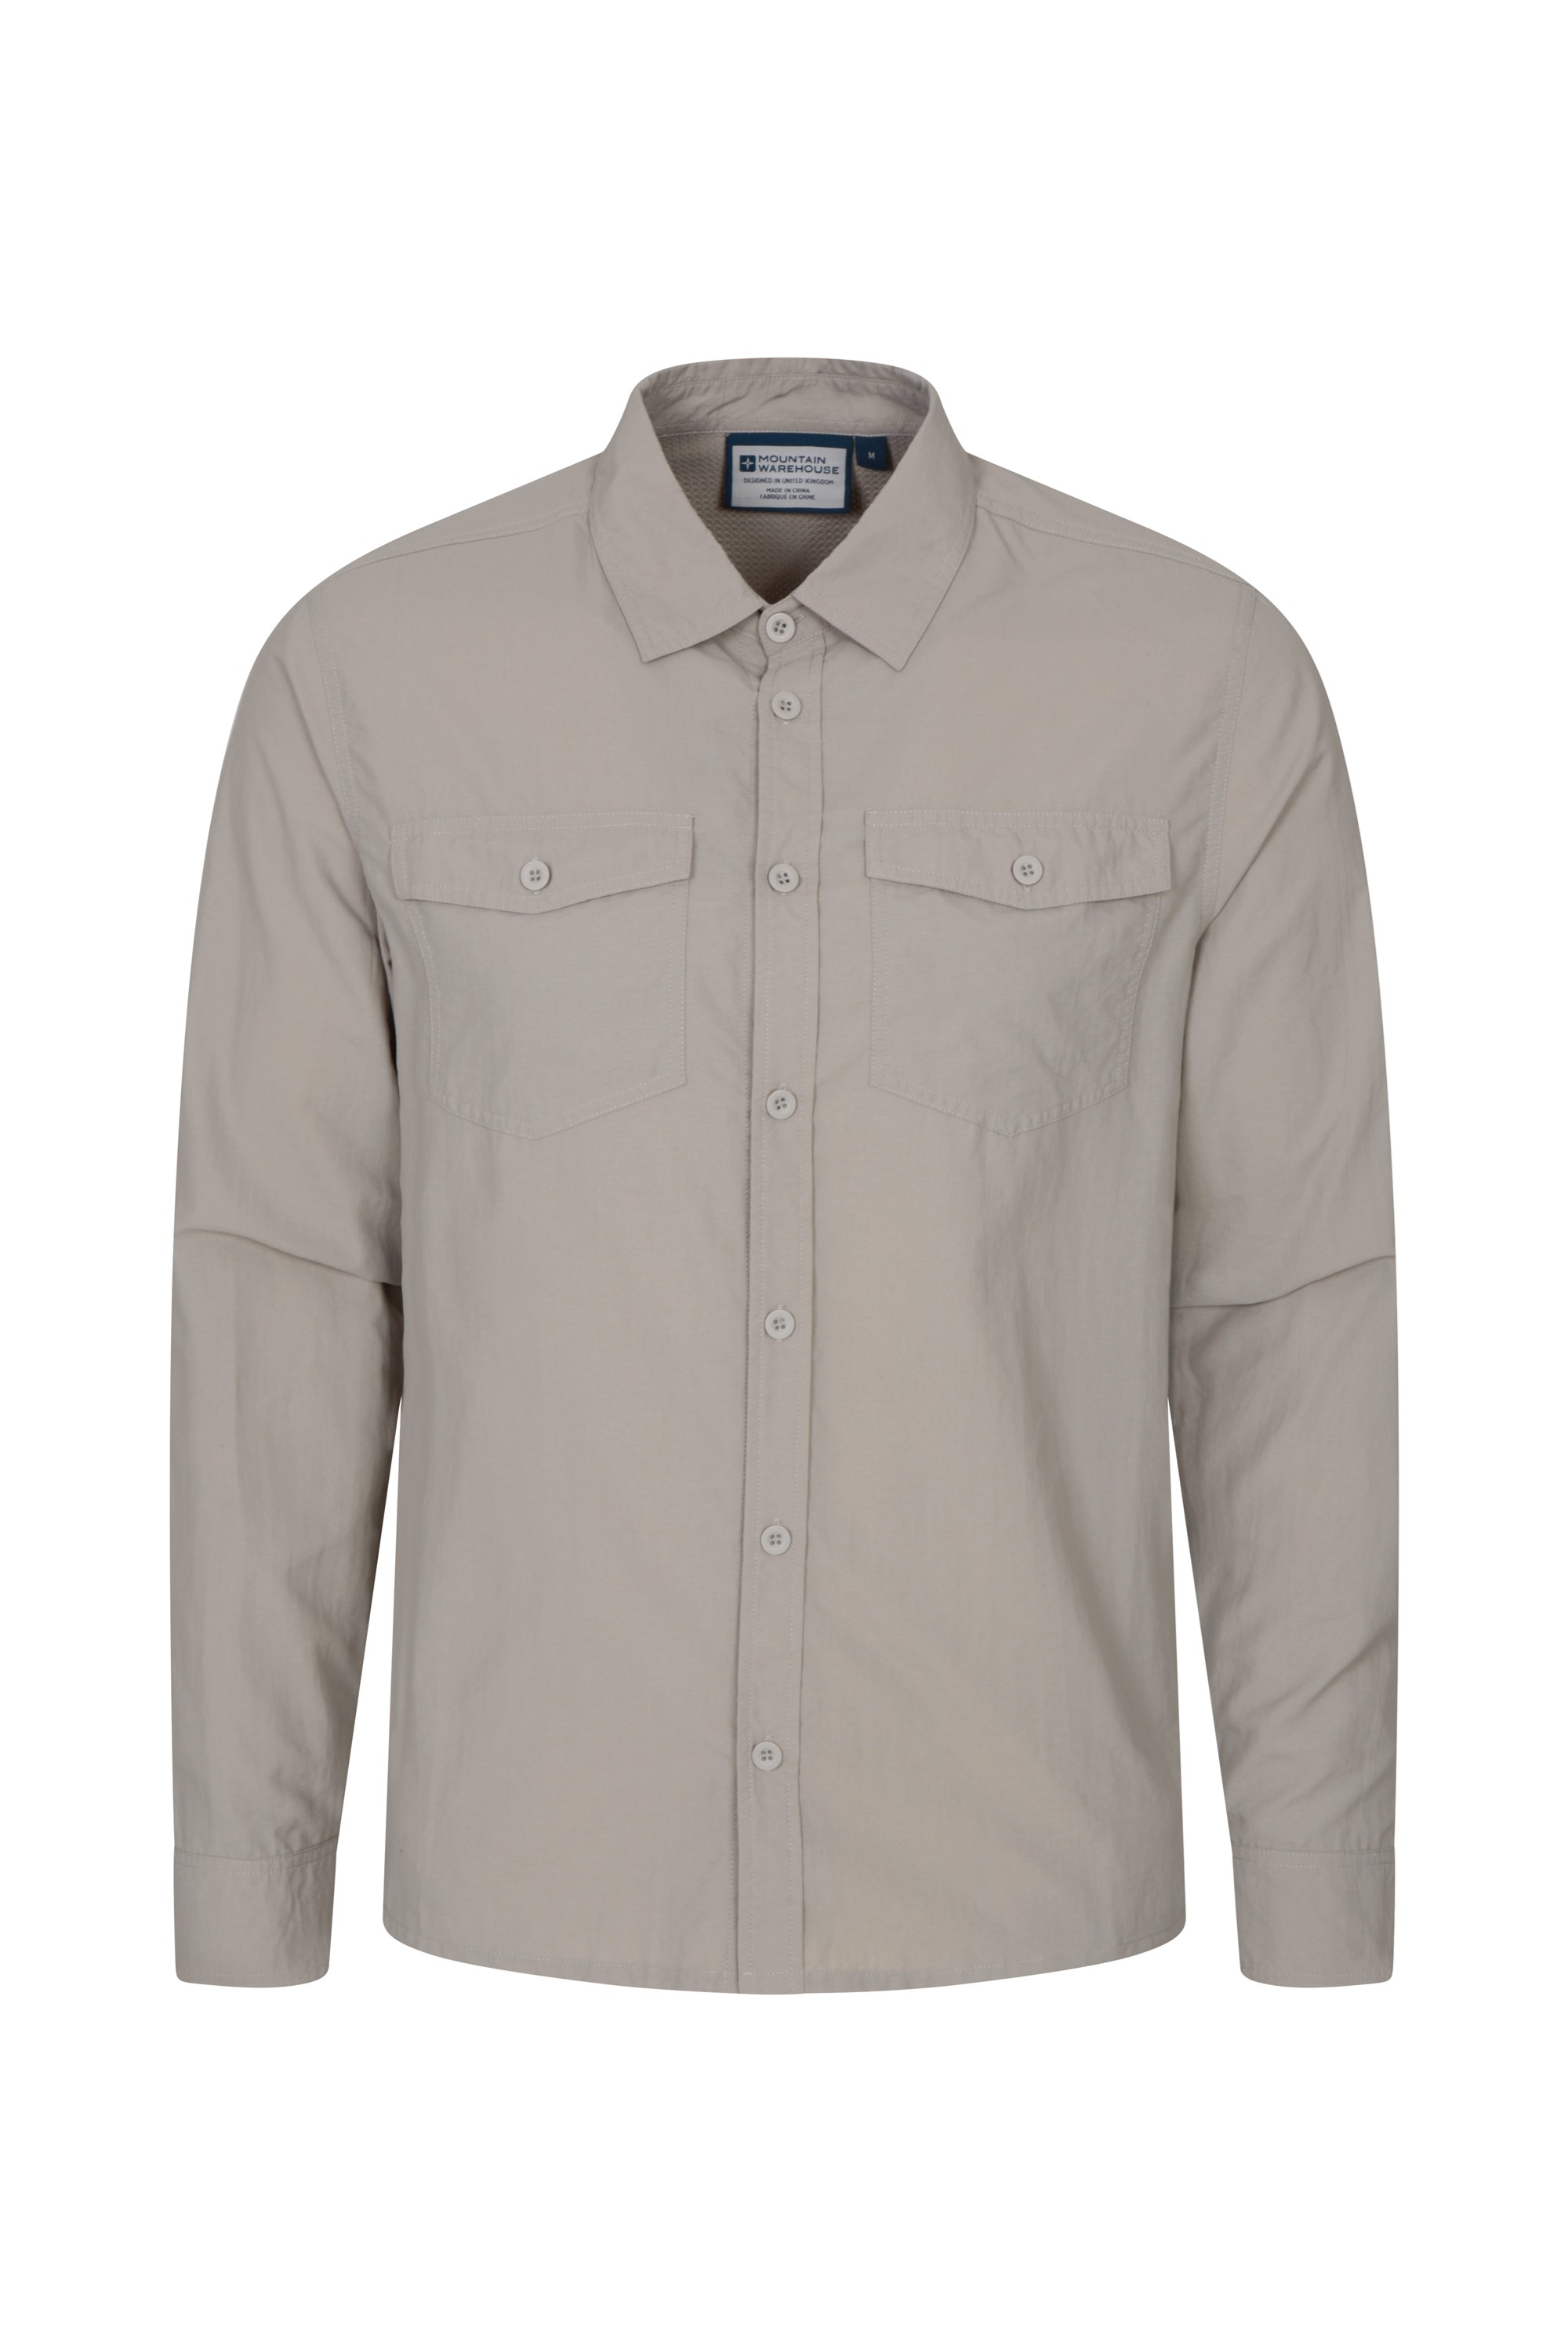 Navigator Convertible Mens Long-Sleeve Shirt | Mountain Warehouse US